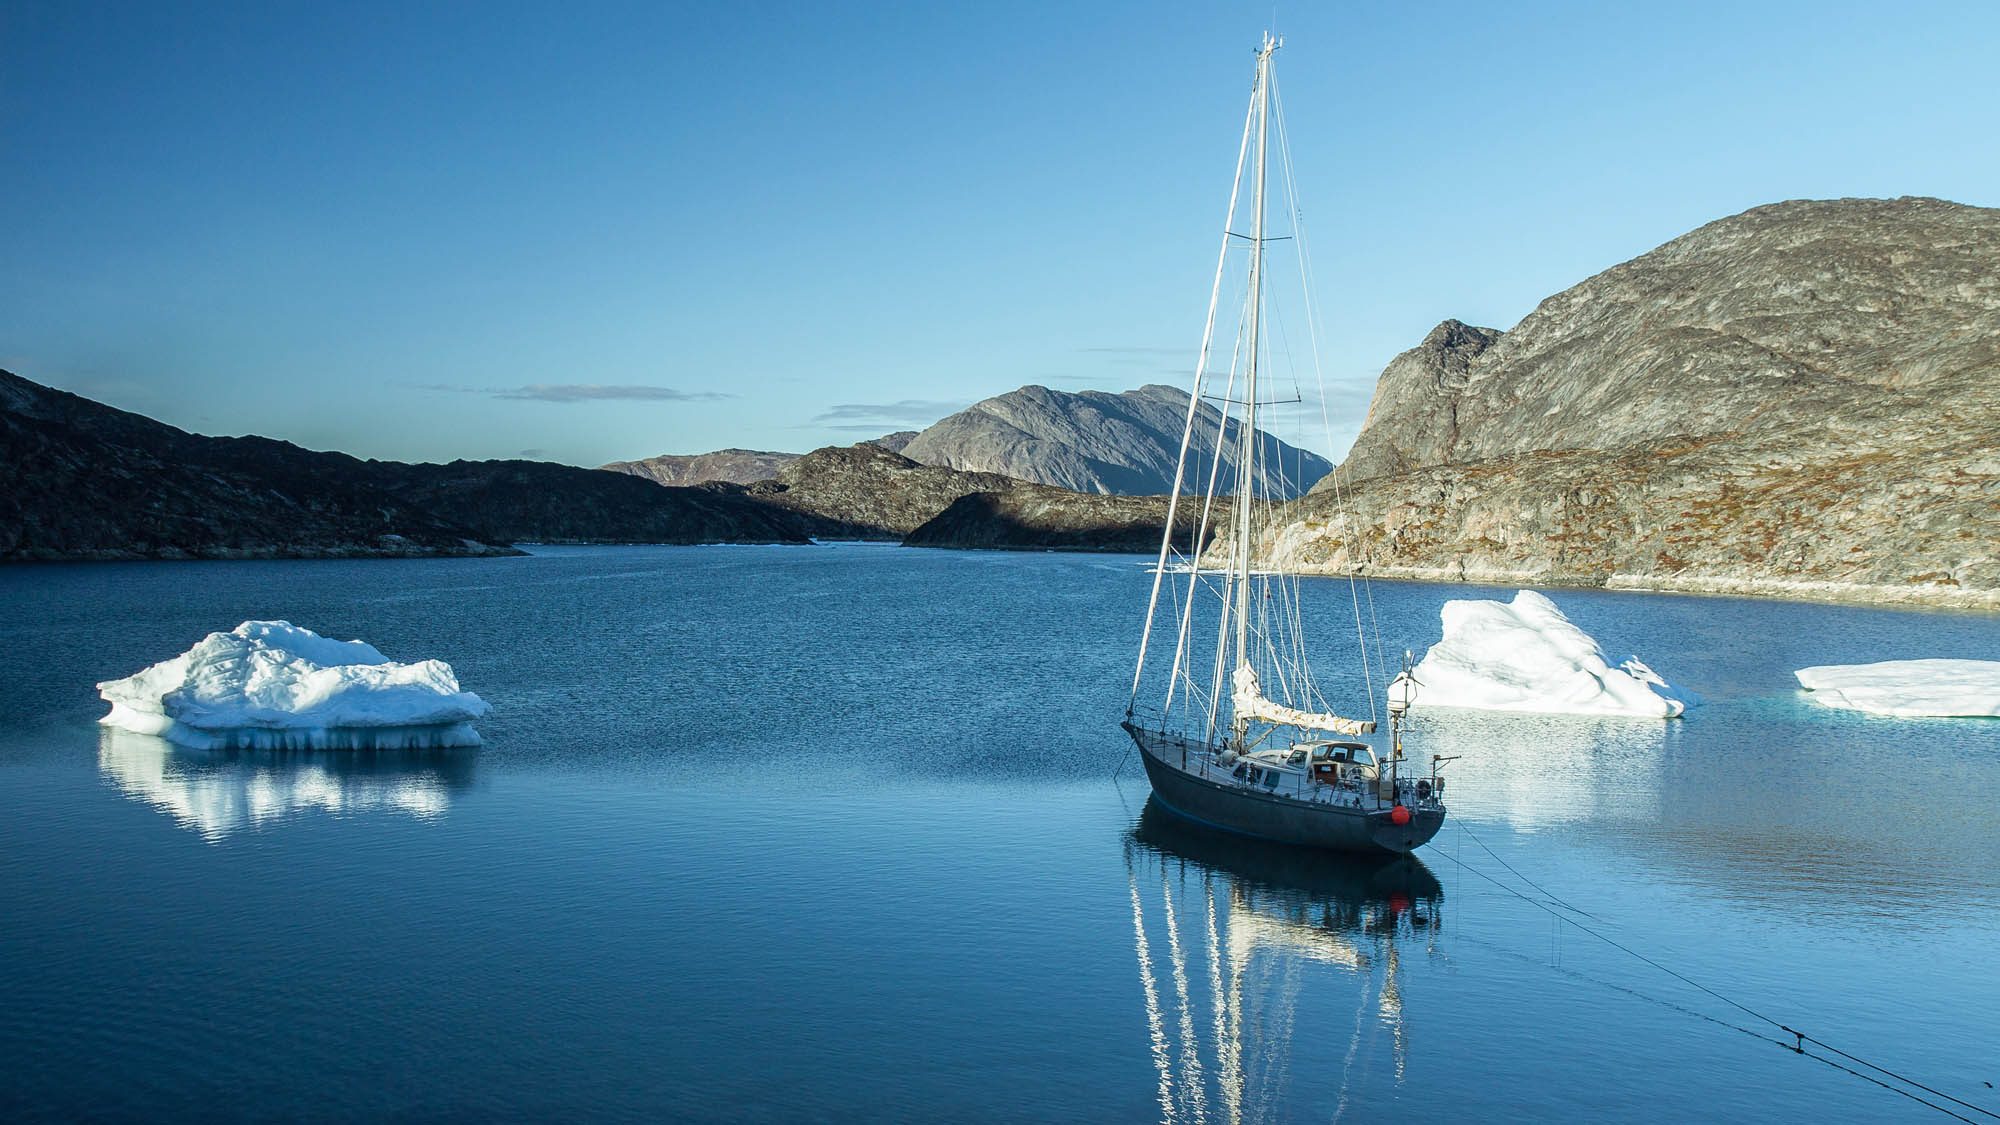 Hutting 54 Polaris explorer yacht groenland